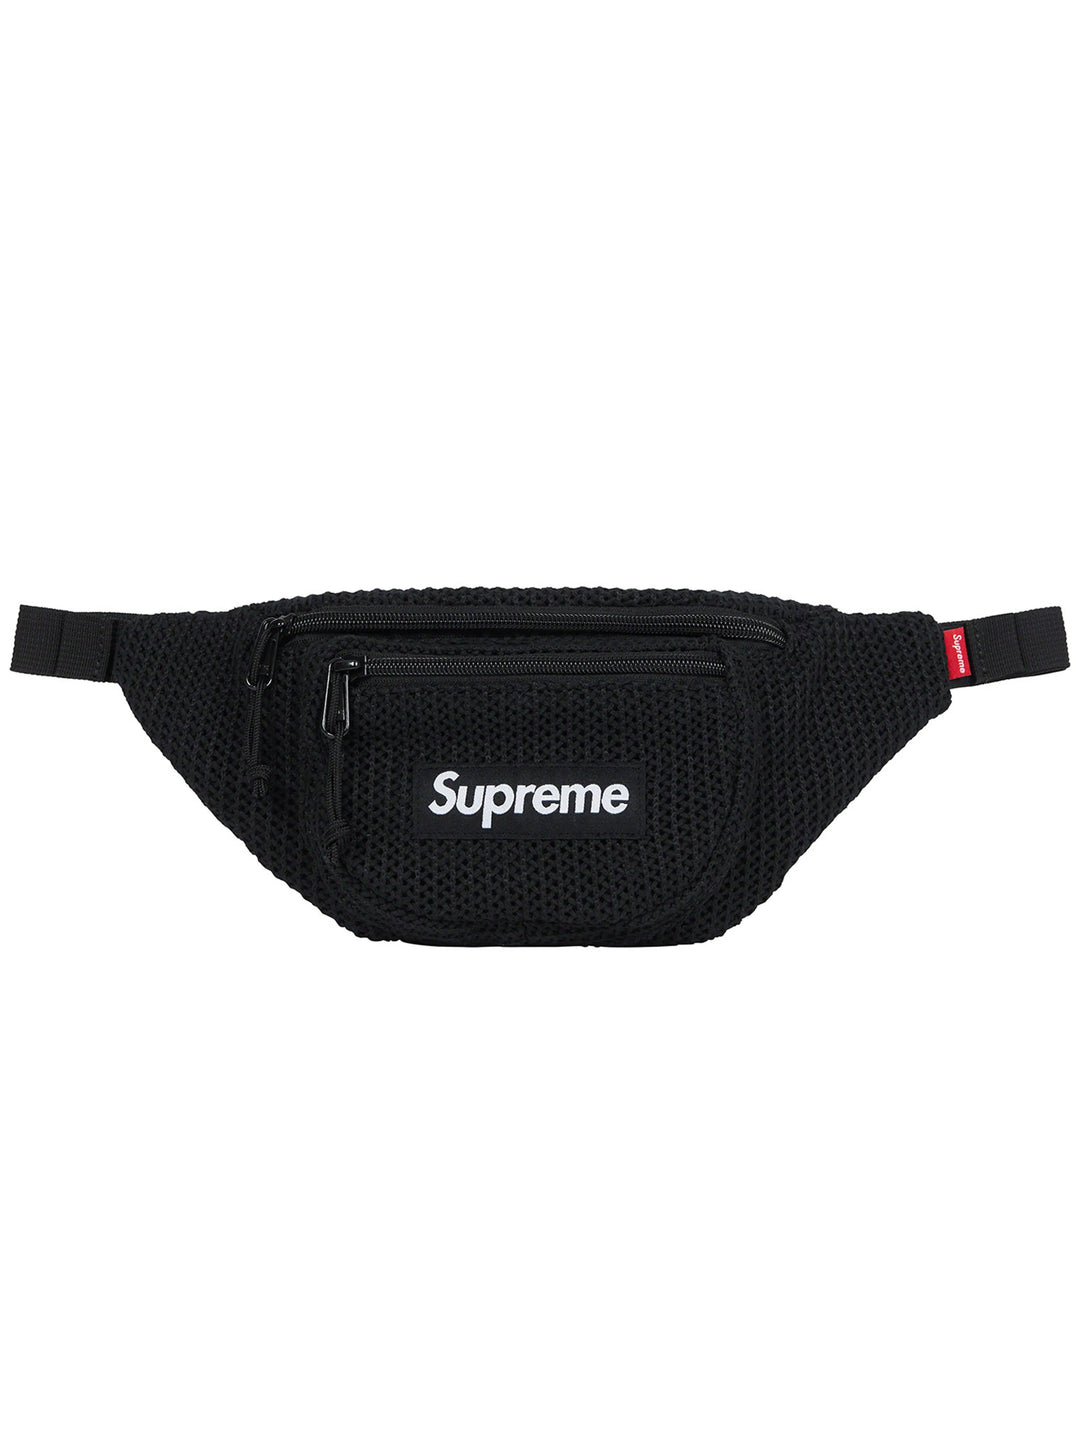 Supreme String Waist Bag Black [SS21] Prior